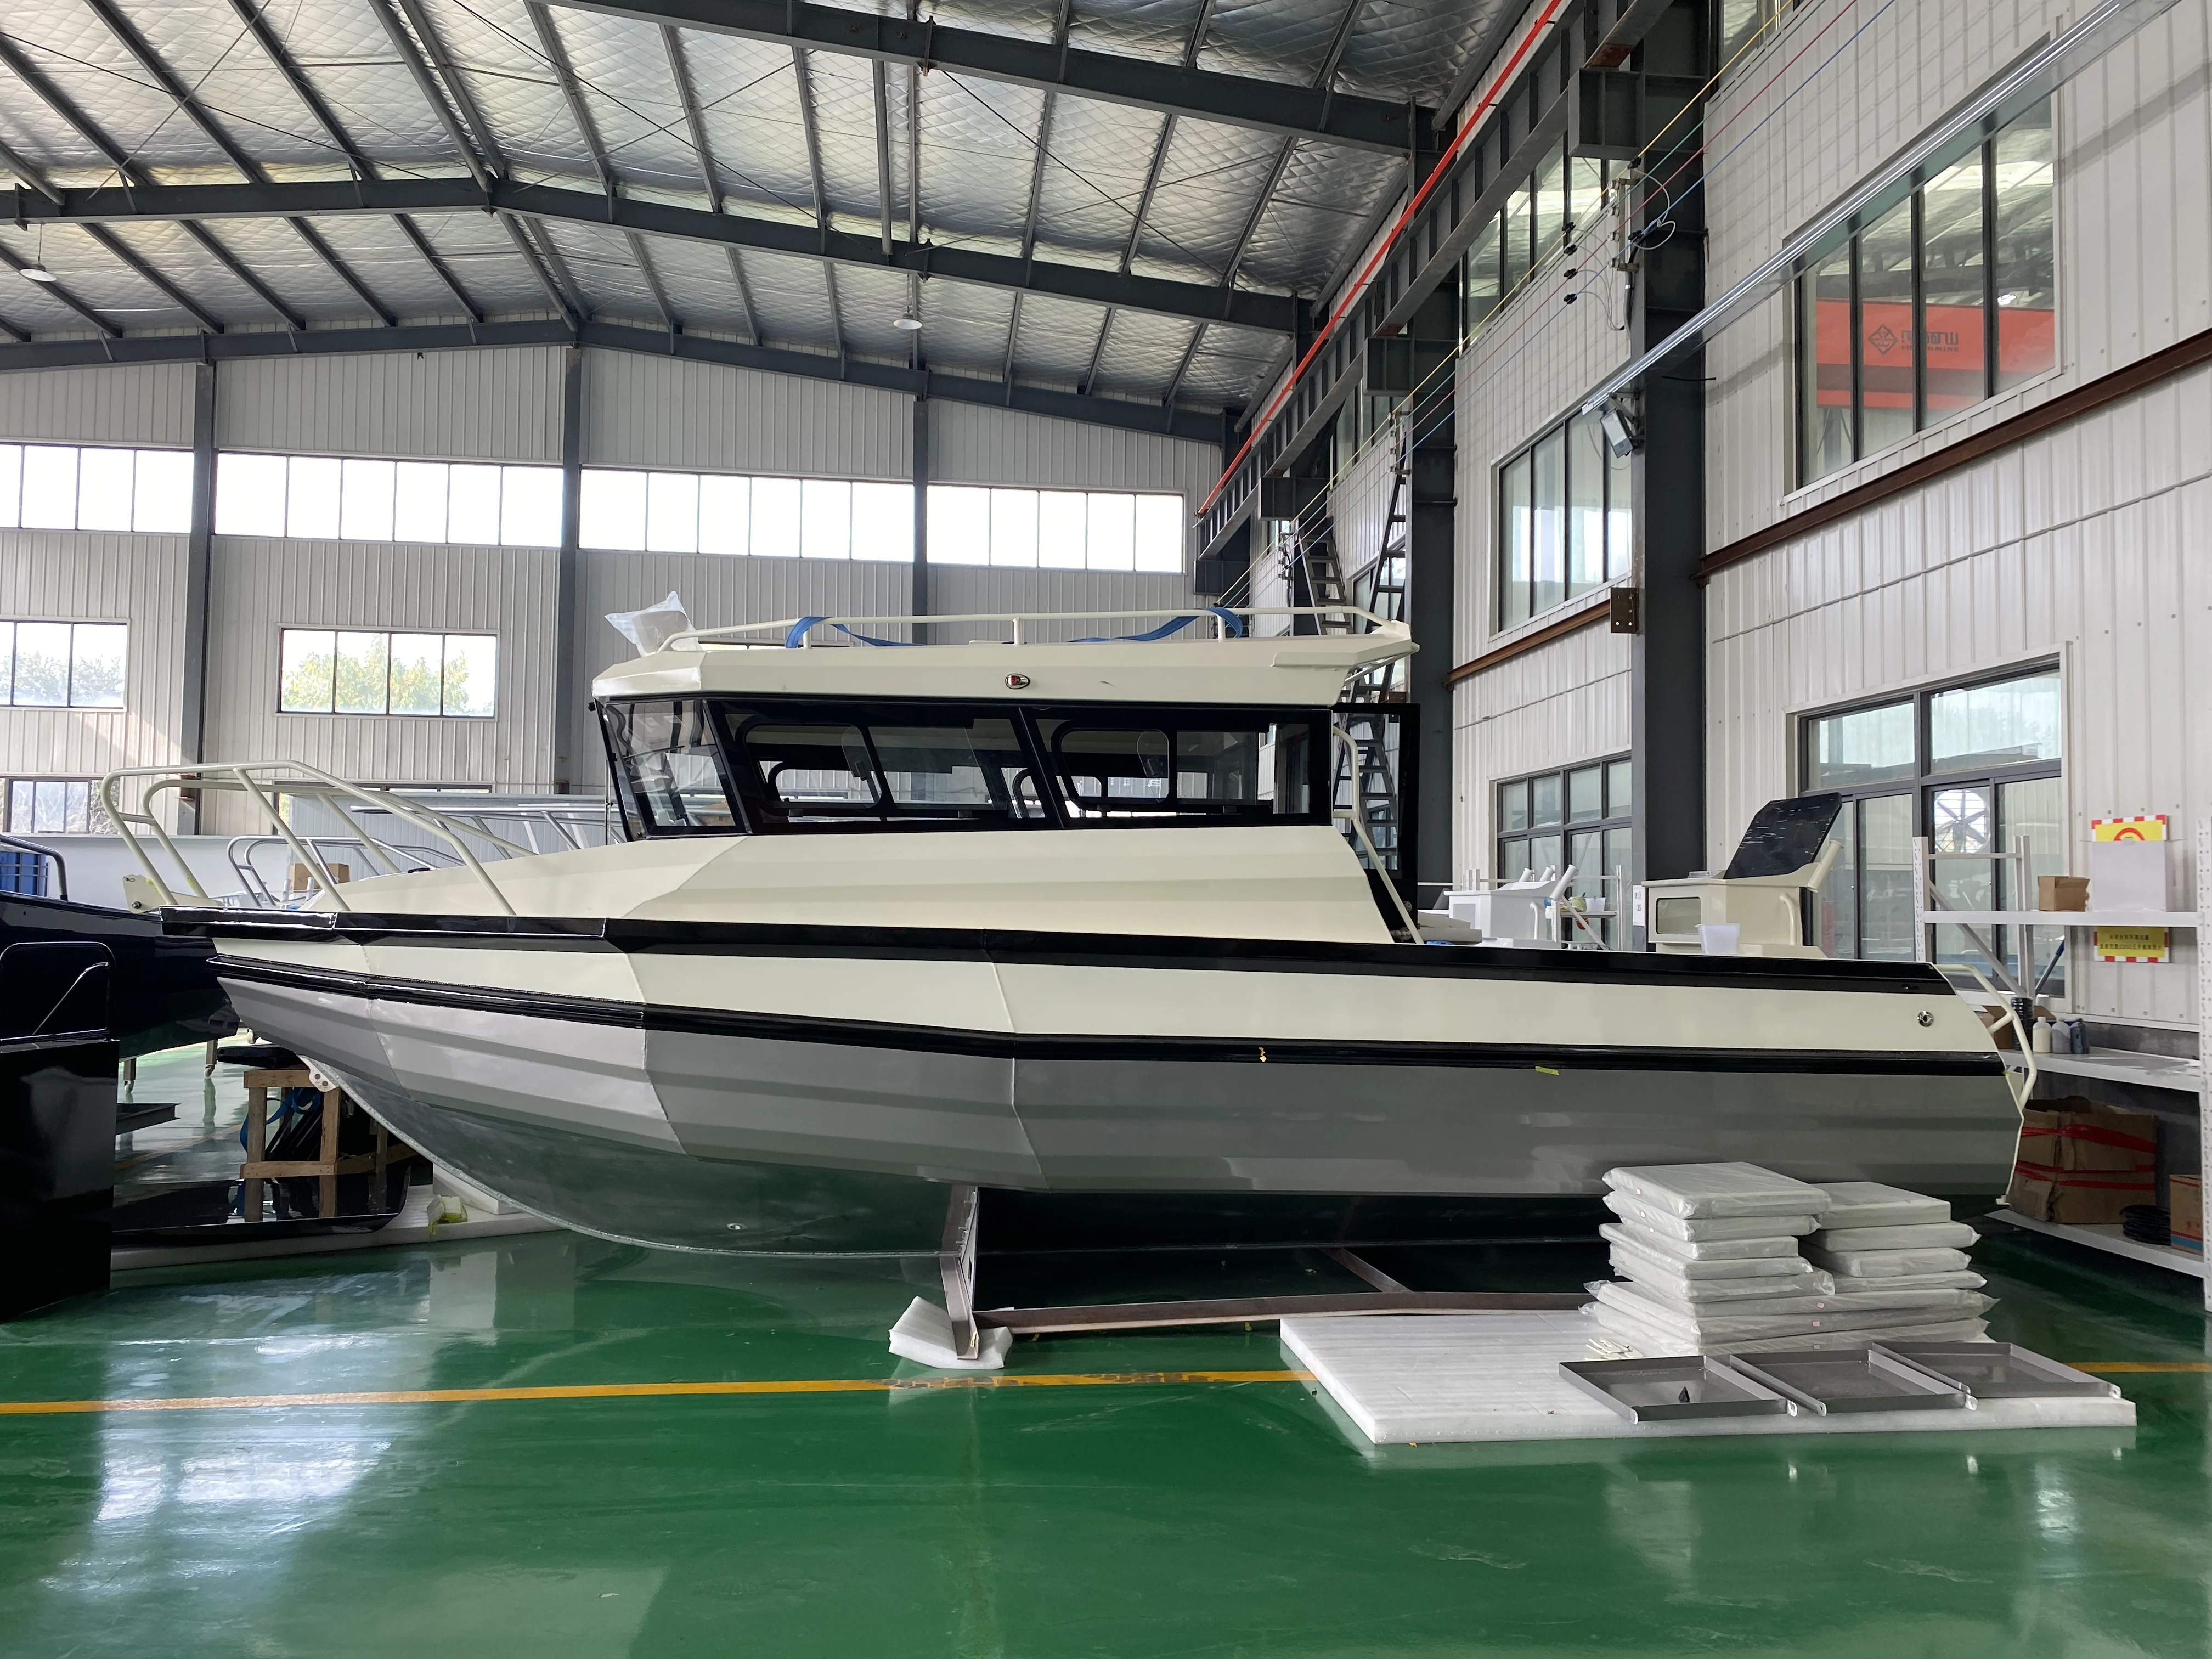 Factory Allsea Easycraft 750 7.5m 25ft Aluminum welded pontoon deep v hull sea fishing boat for sale